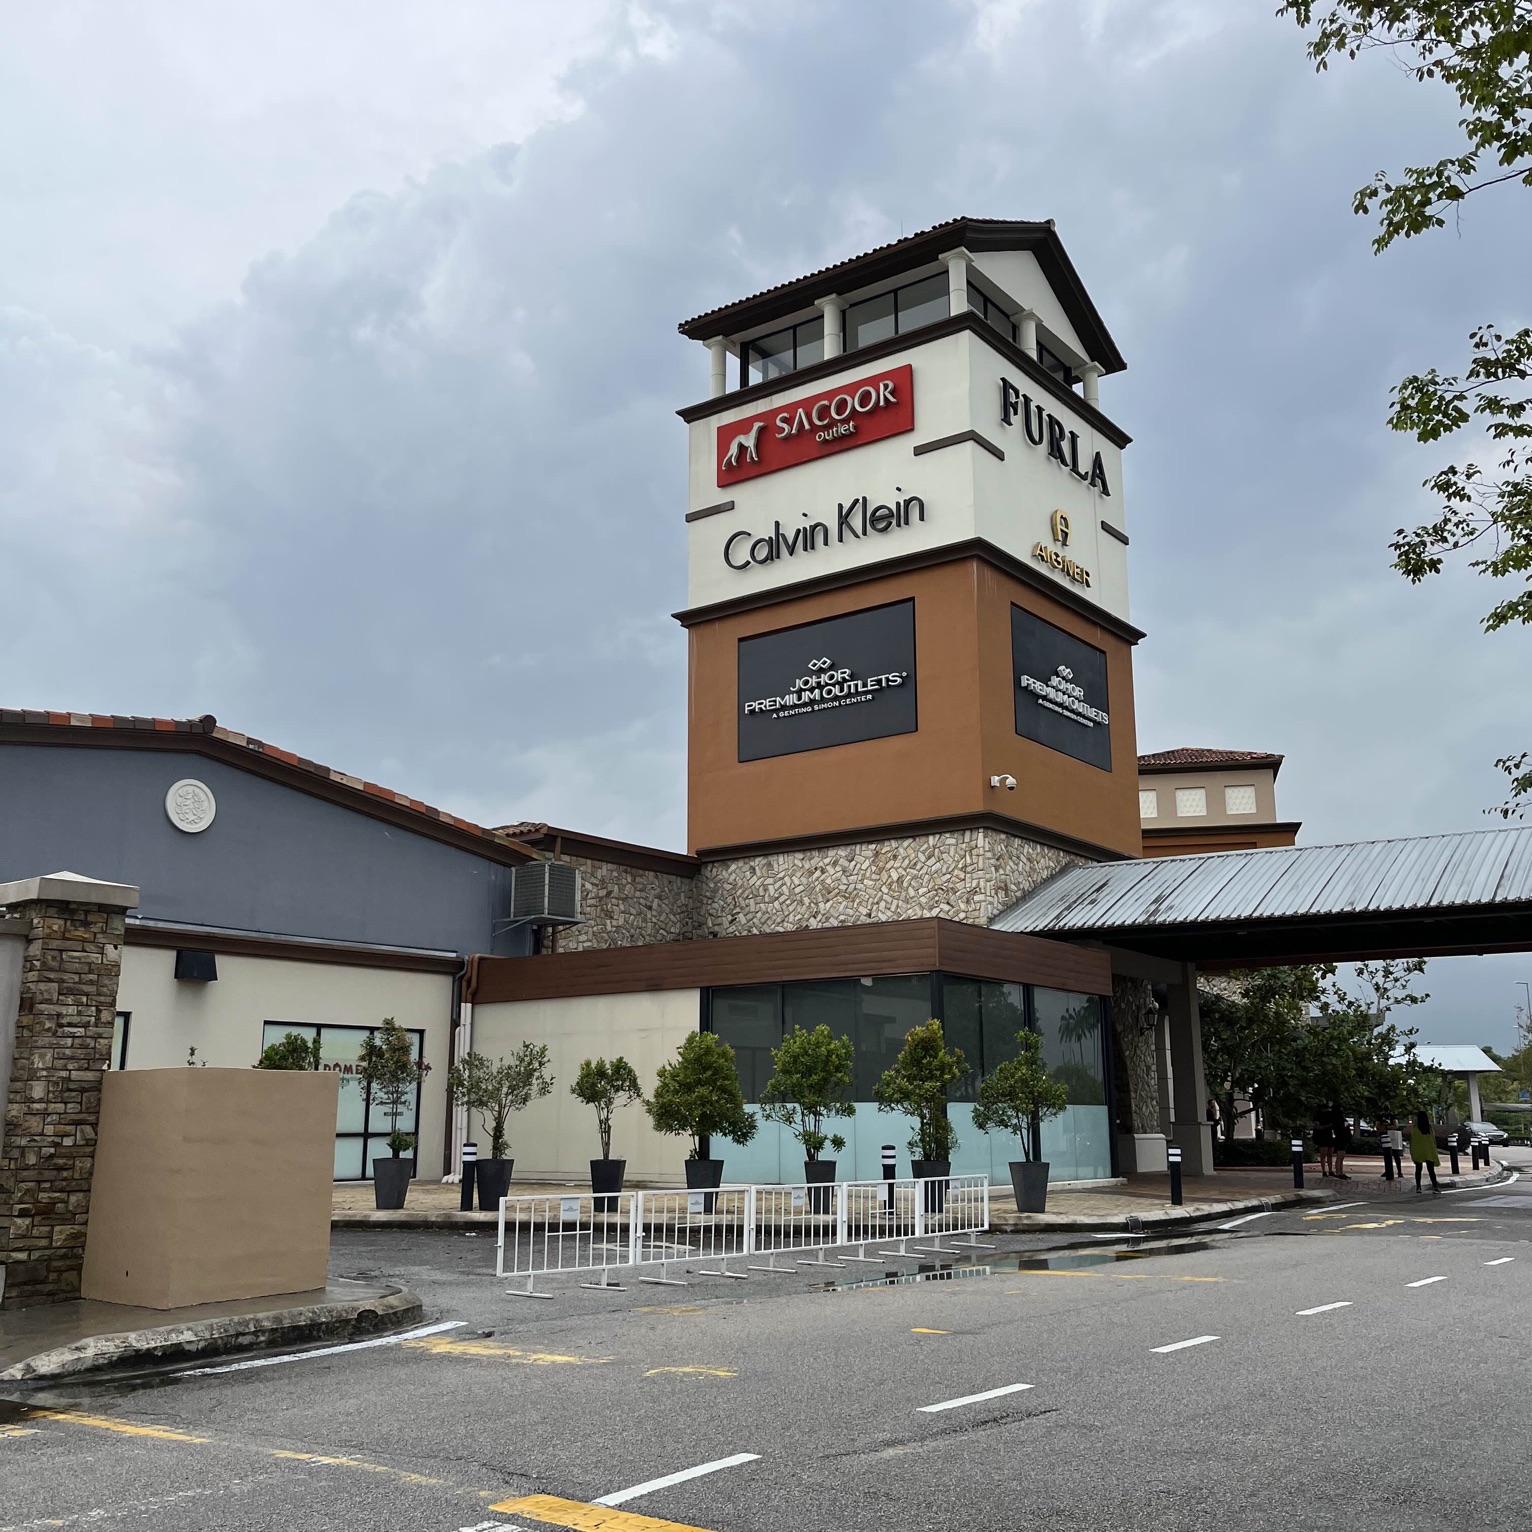 Johor – Premium Outlets Malaysia